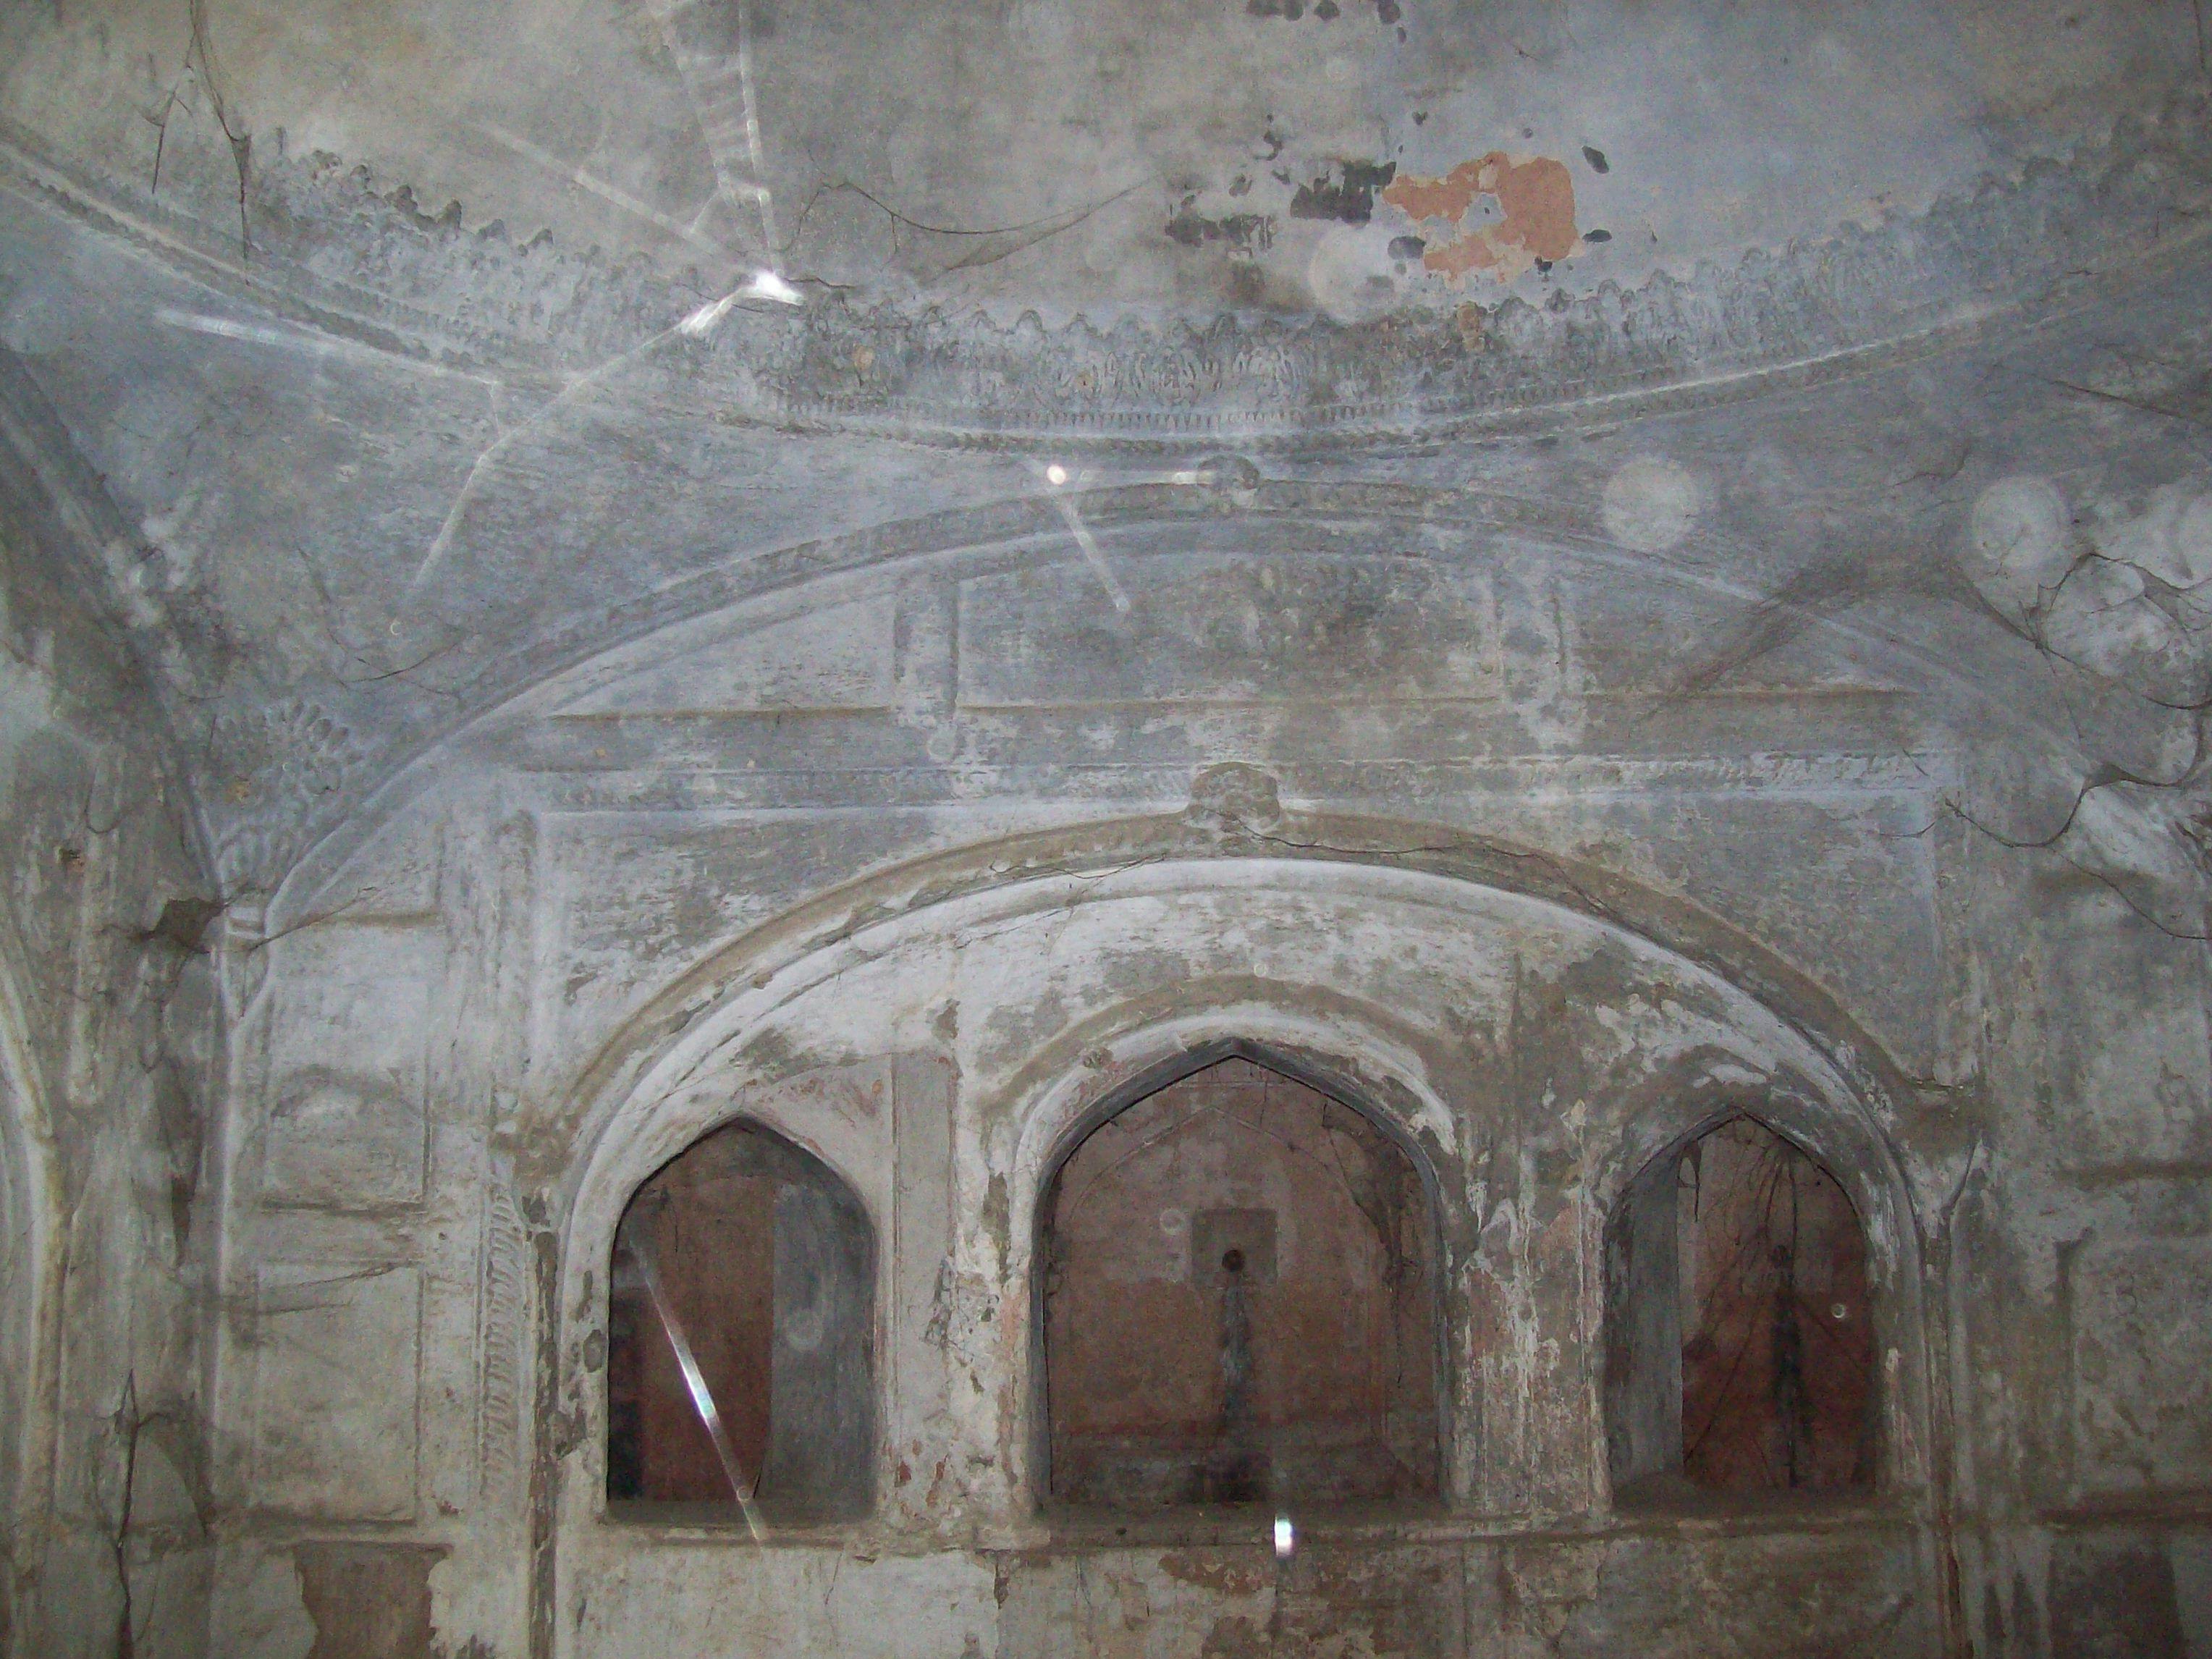 Hammam inner chamber, Pilibhit, 2010